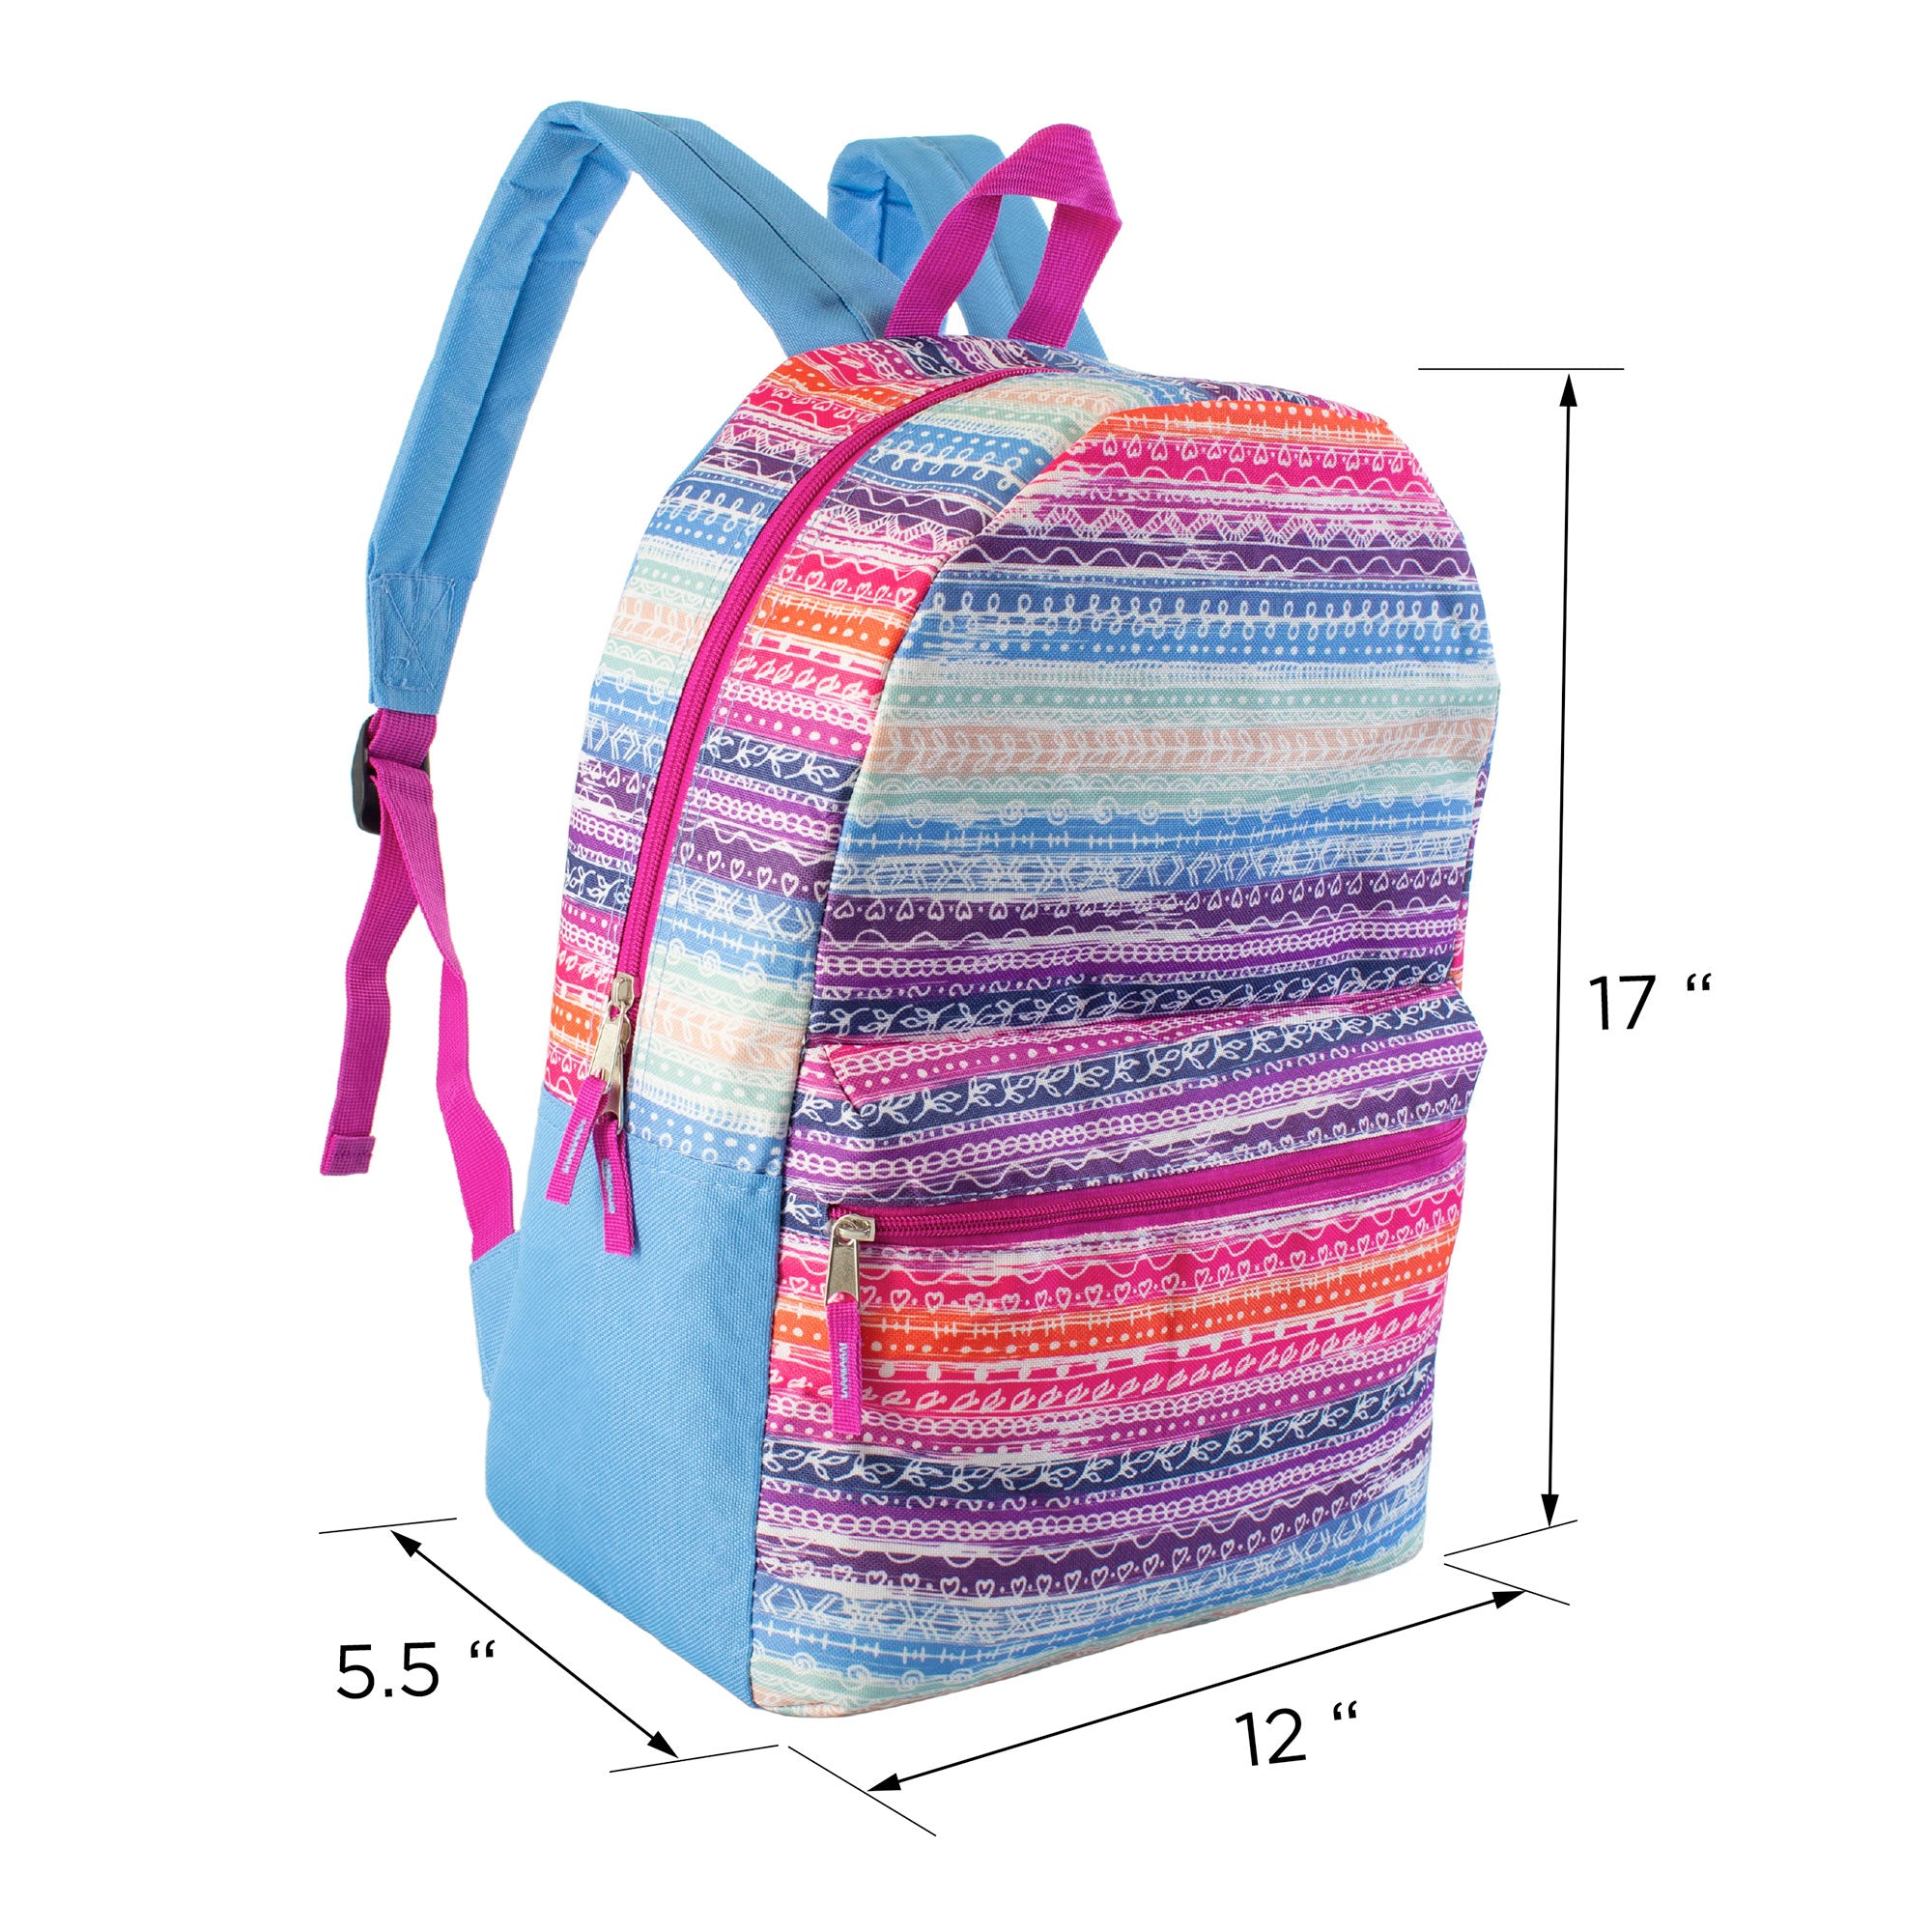 17" Wholesale Backpacks In 12 Assorted Prints & Colors - Bulk Case Of 24 Backpacks